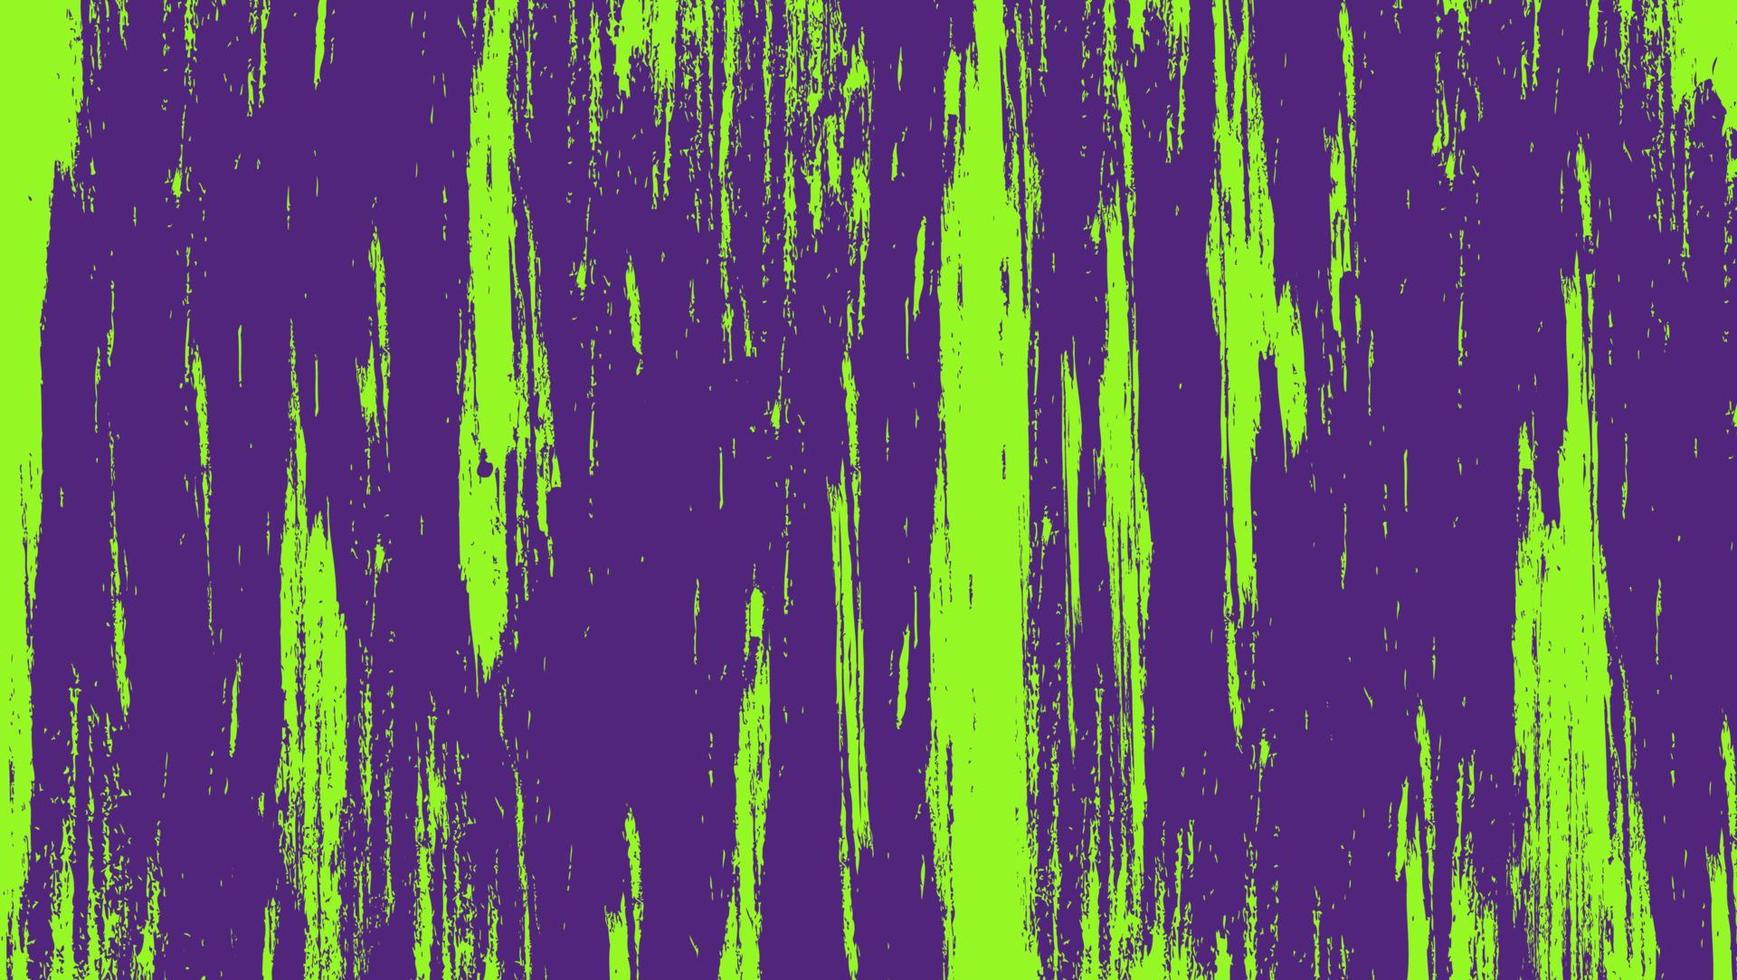 Abstract Bright Green Grunge Texture In Dark Purple Background vector